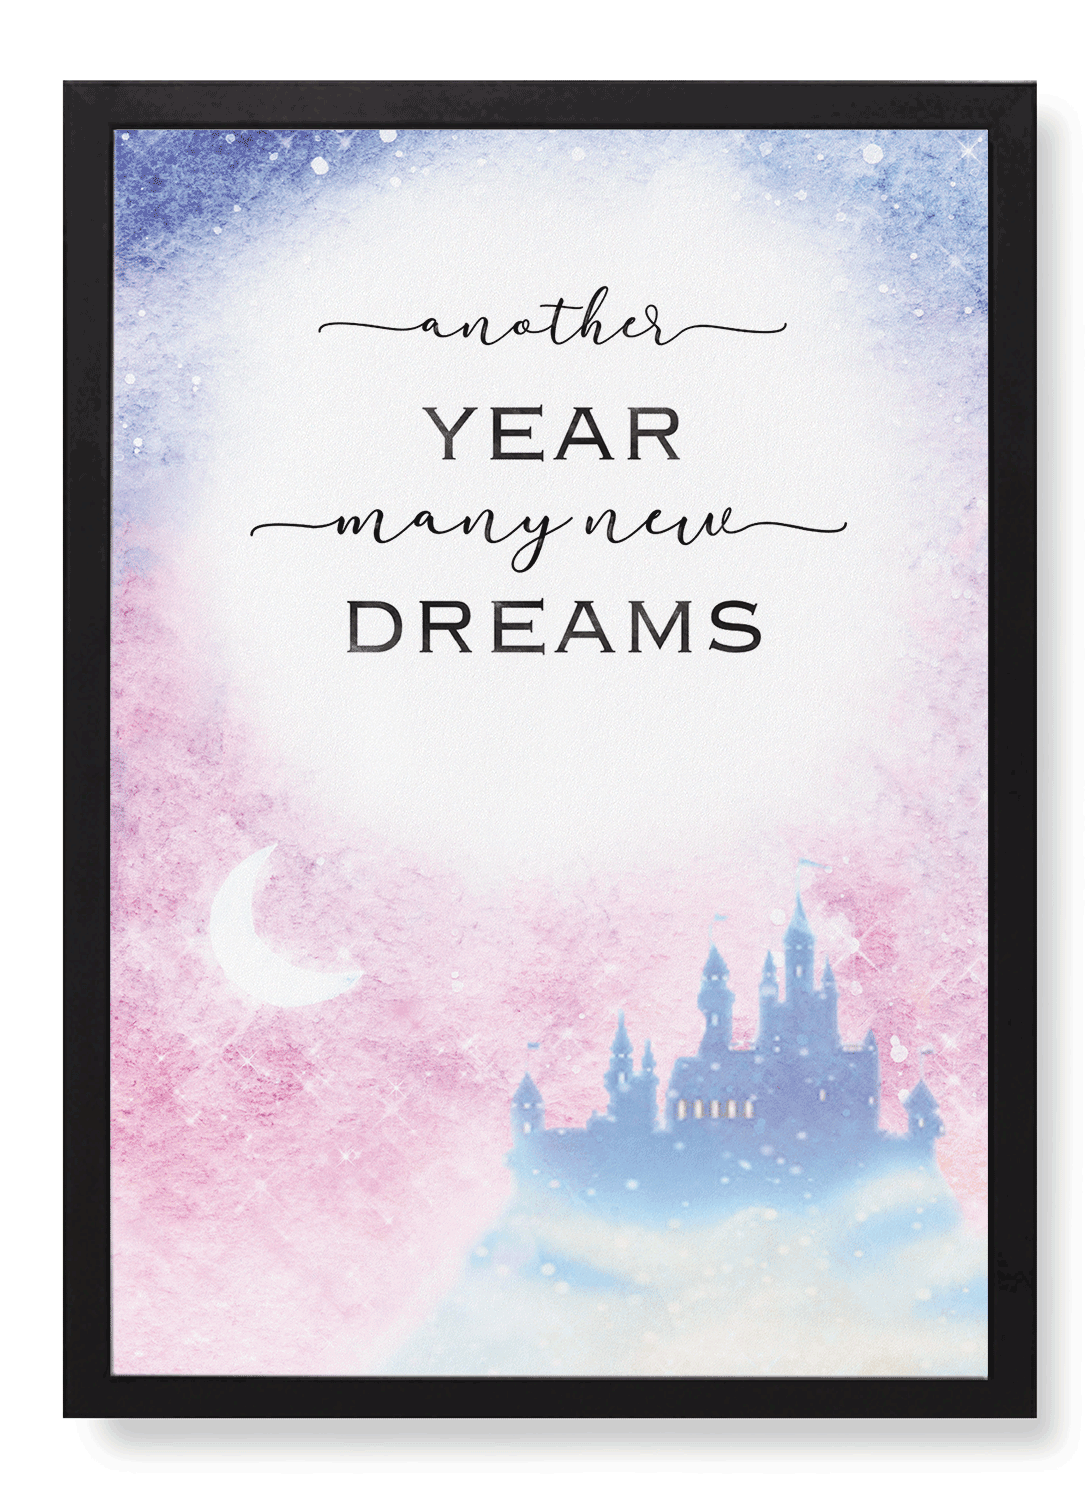 A YEAR OF DREAMS